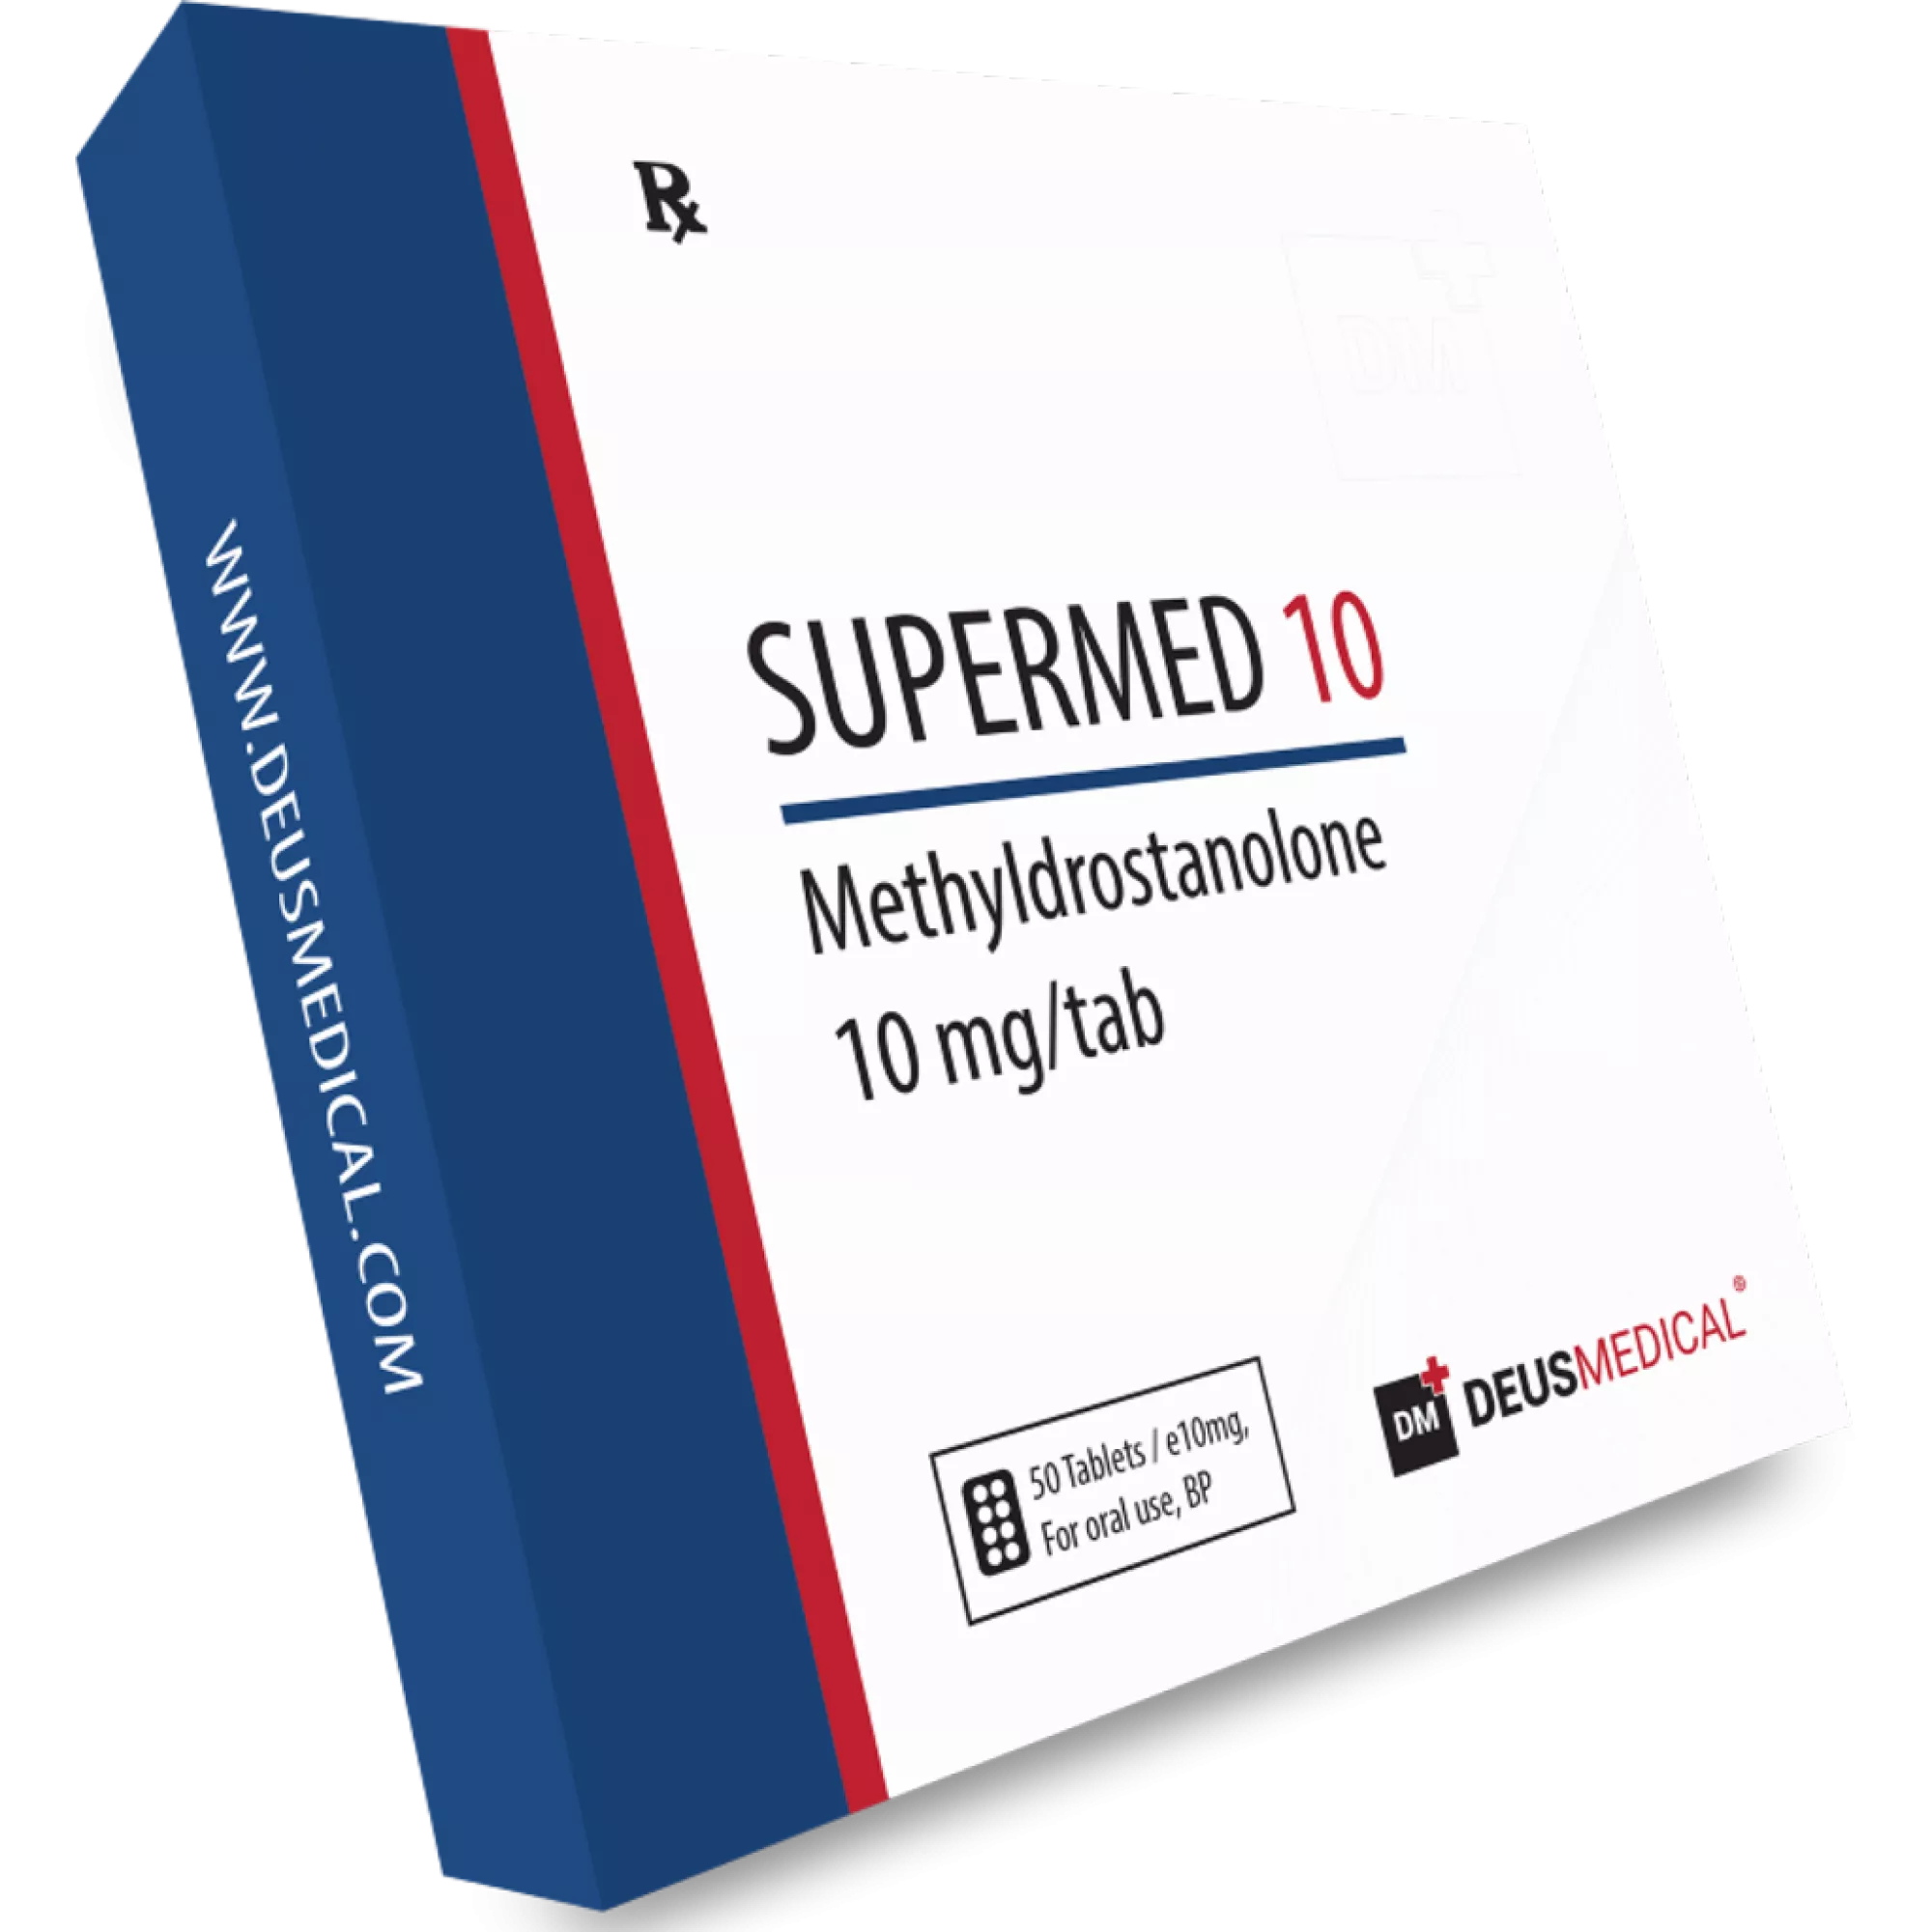 SUPERMED 10 (Methyldrostanolone), Deus Medical, Köp steroider online - www.deuspower.shop